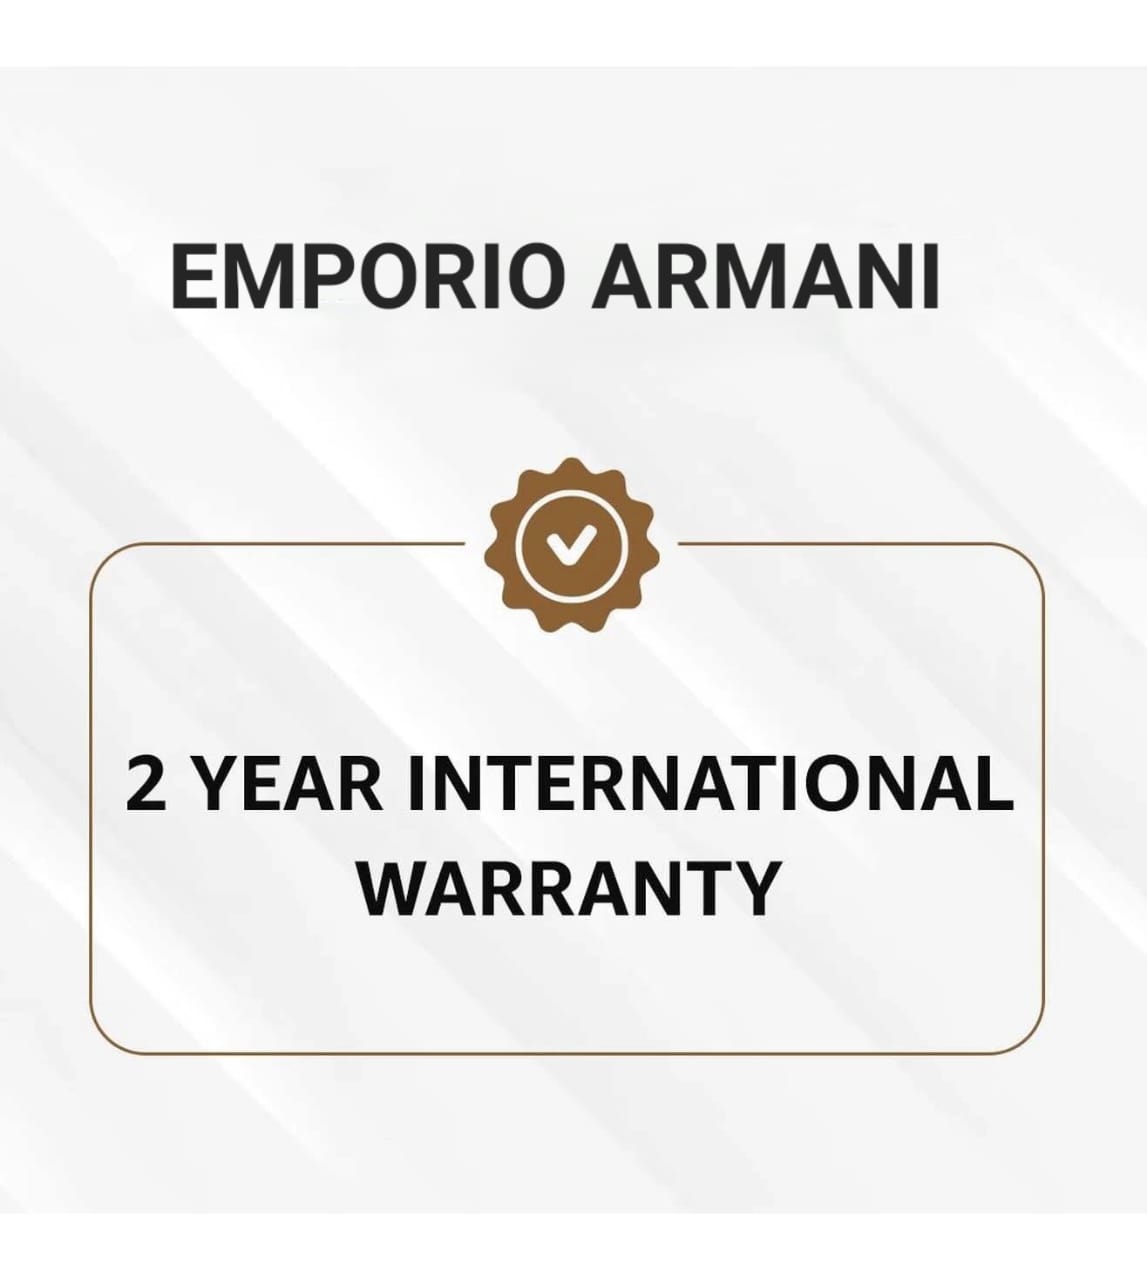 AR60075 | EMPORIO ARMANI Leo Automatic Watch for Women